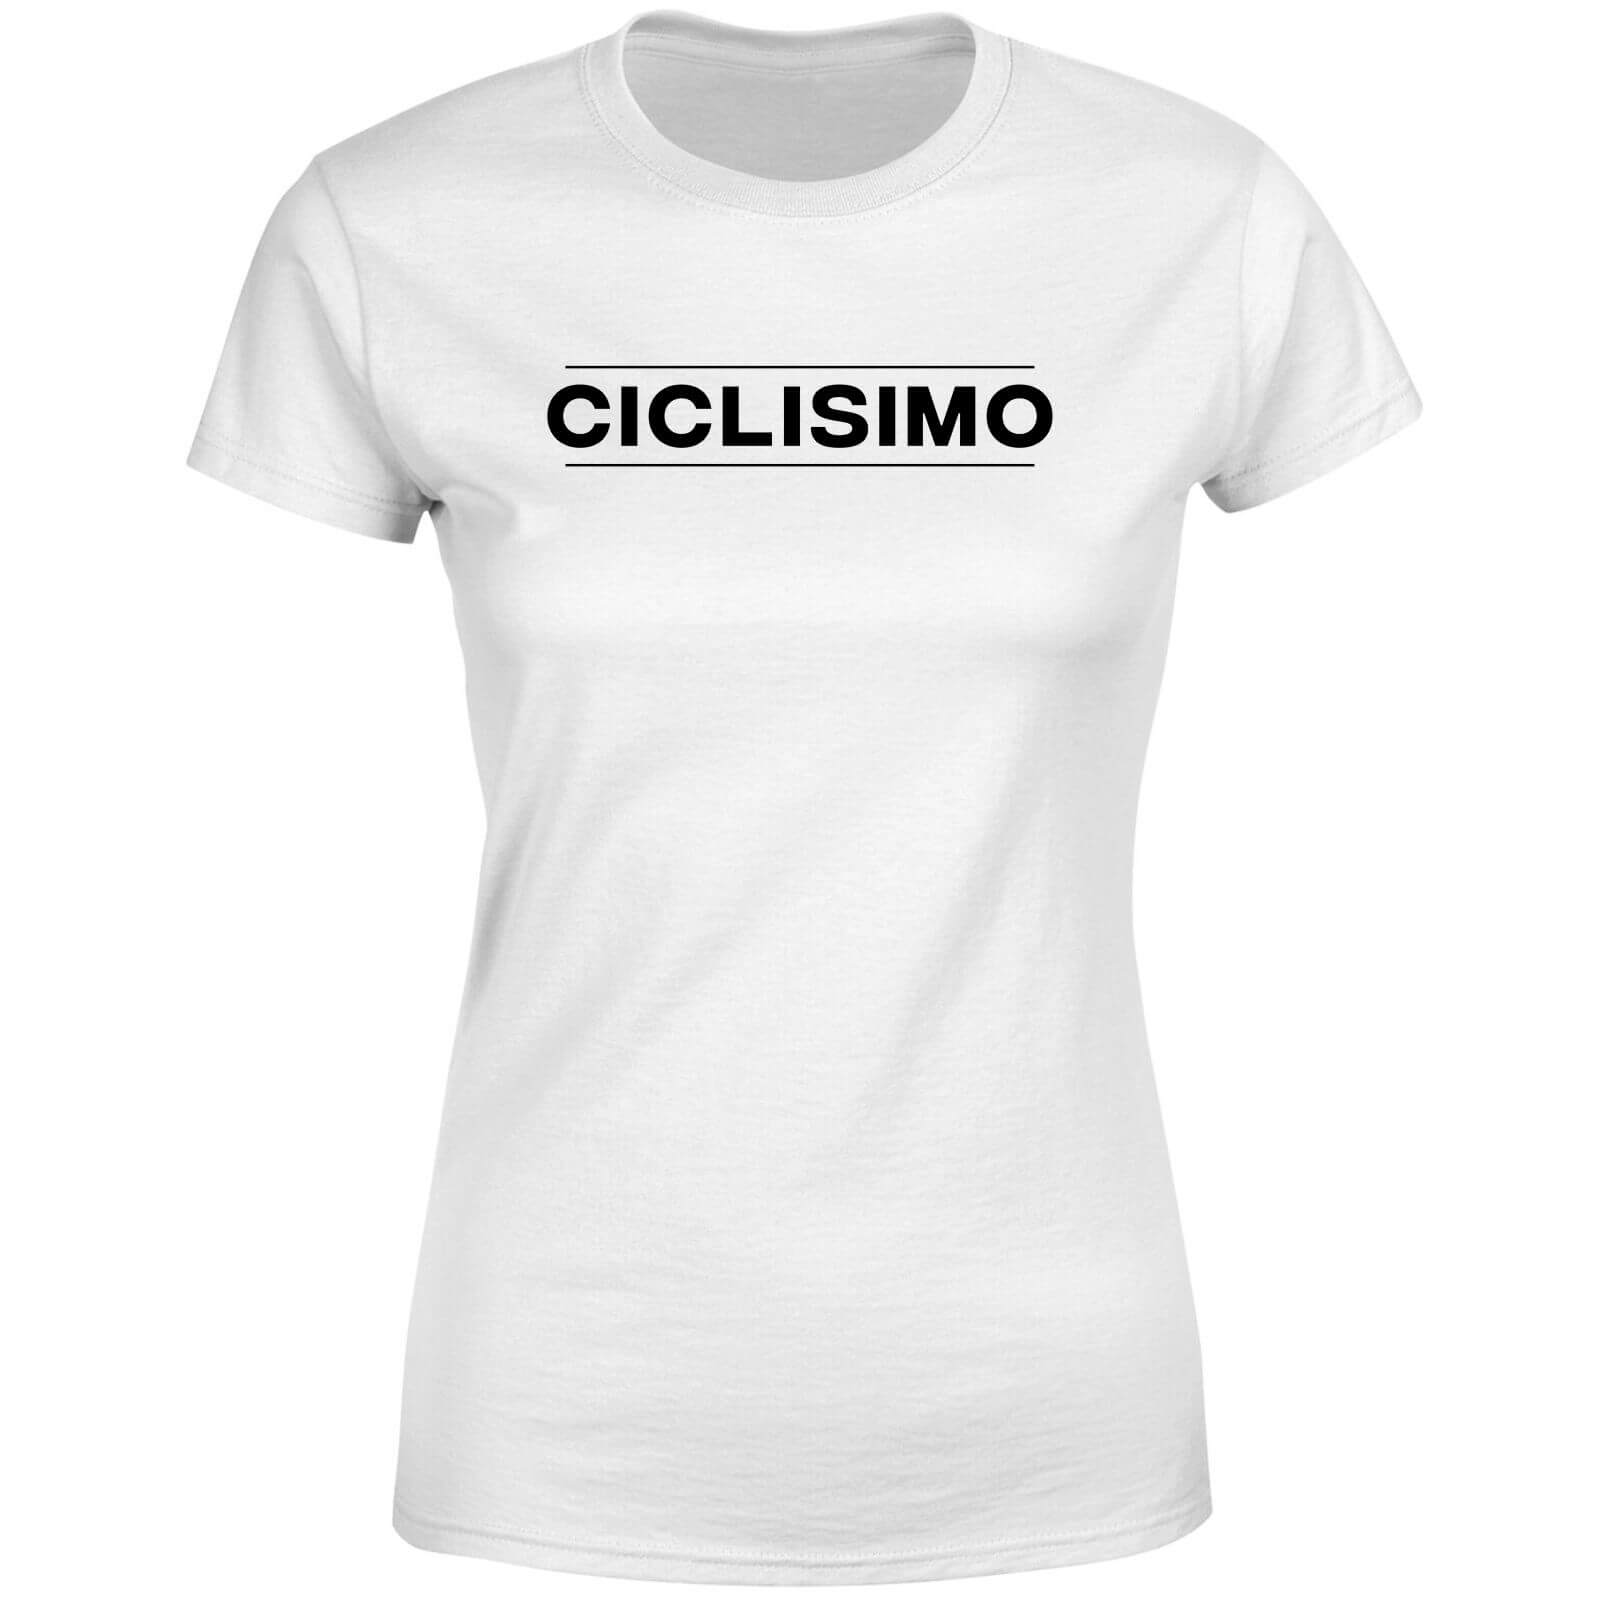 Ciclisimo Women's T-Shirt - White - S - White